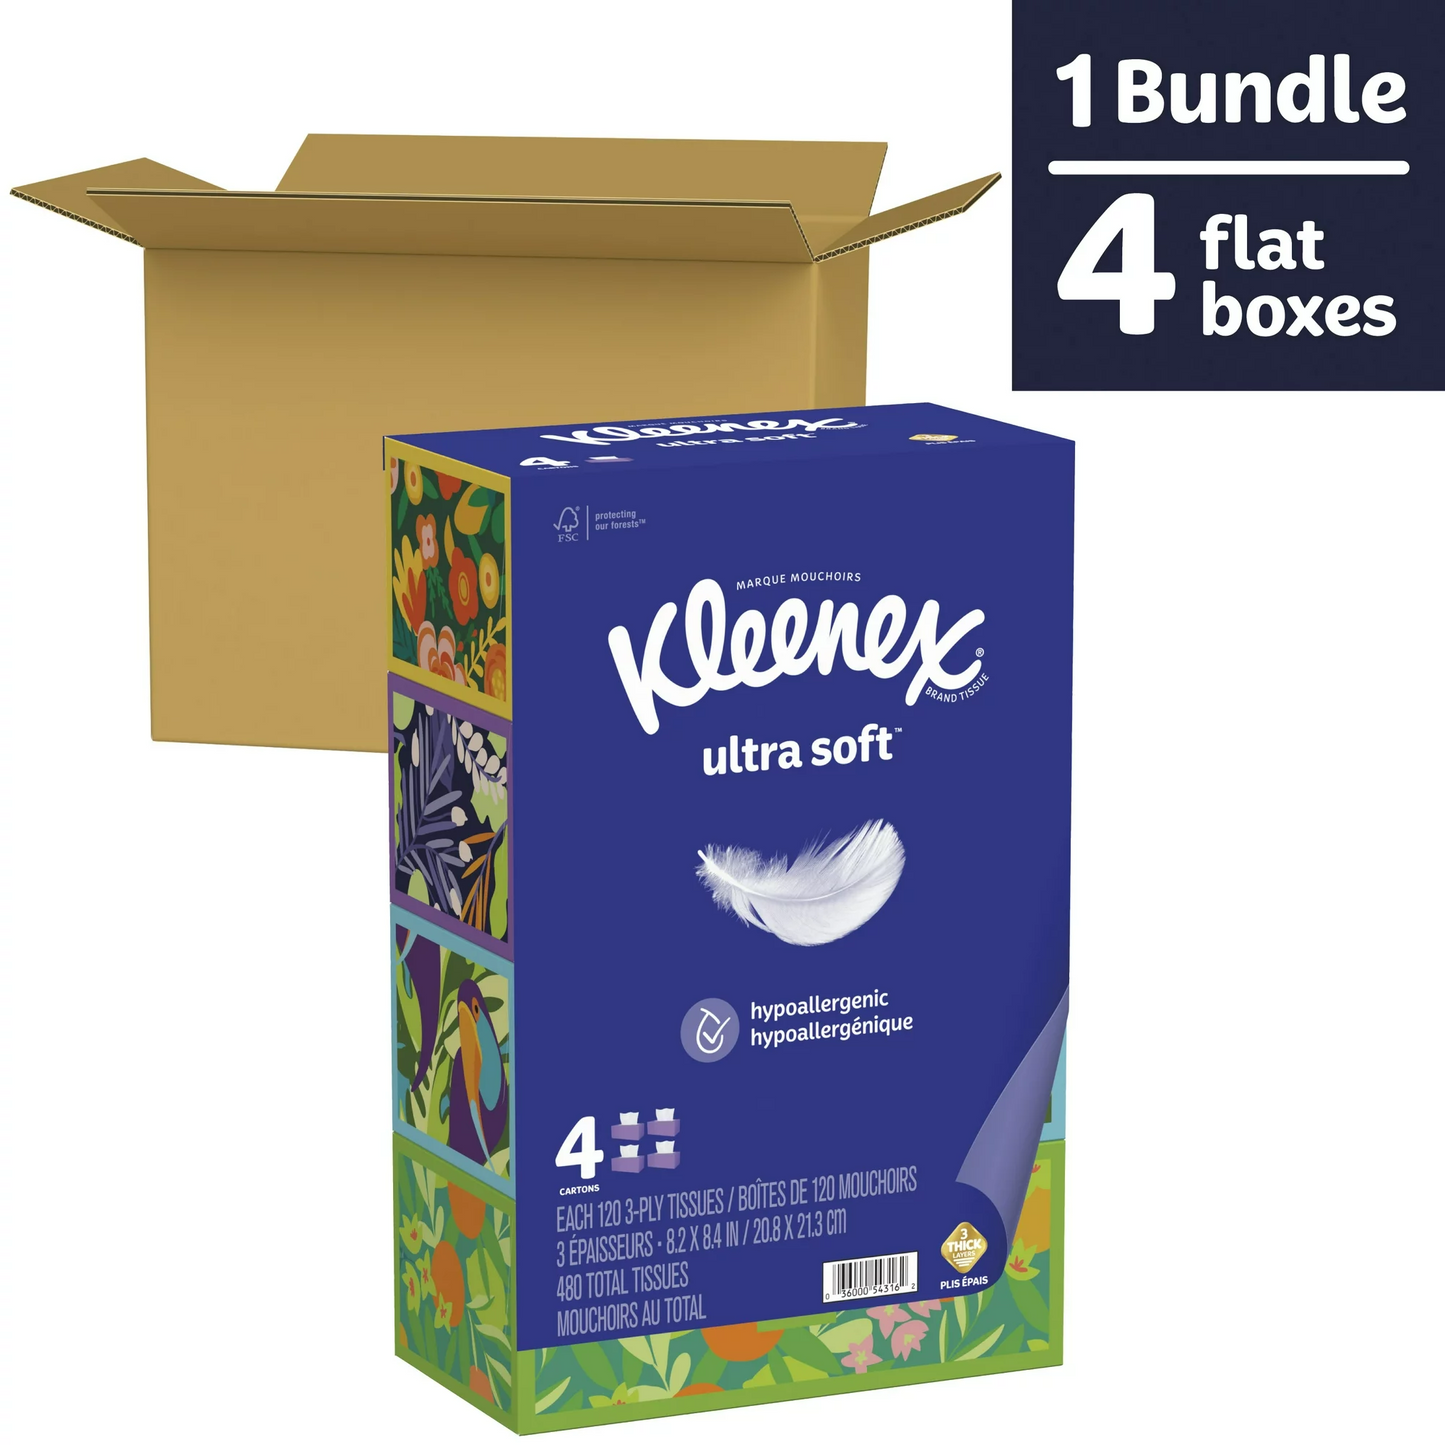 Kleenex Ultra Soft Facial Tissues, 4 Flat Boxes, 120 White Tissues per Box, 3-Ply